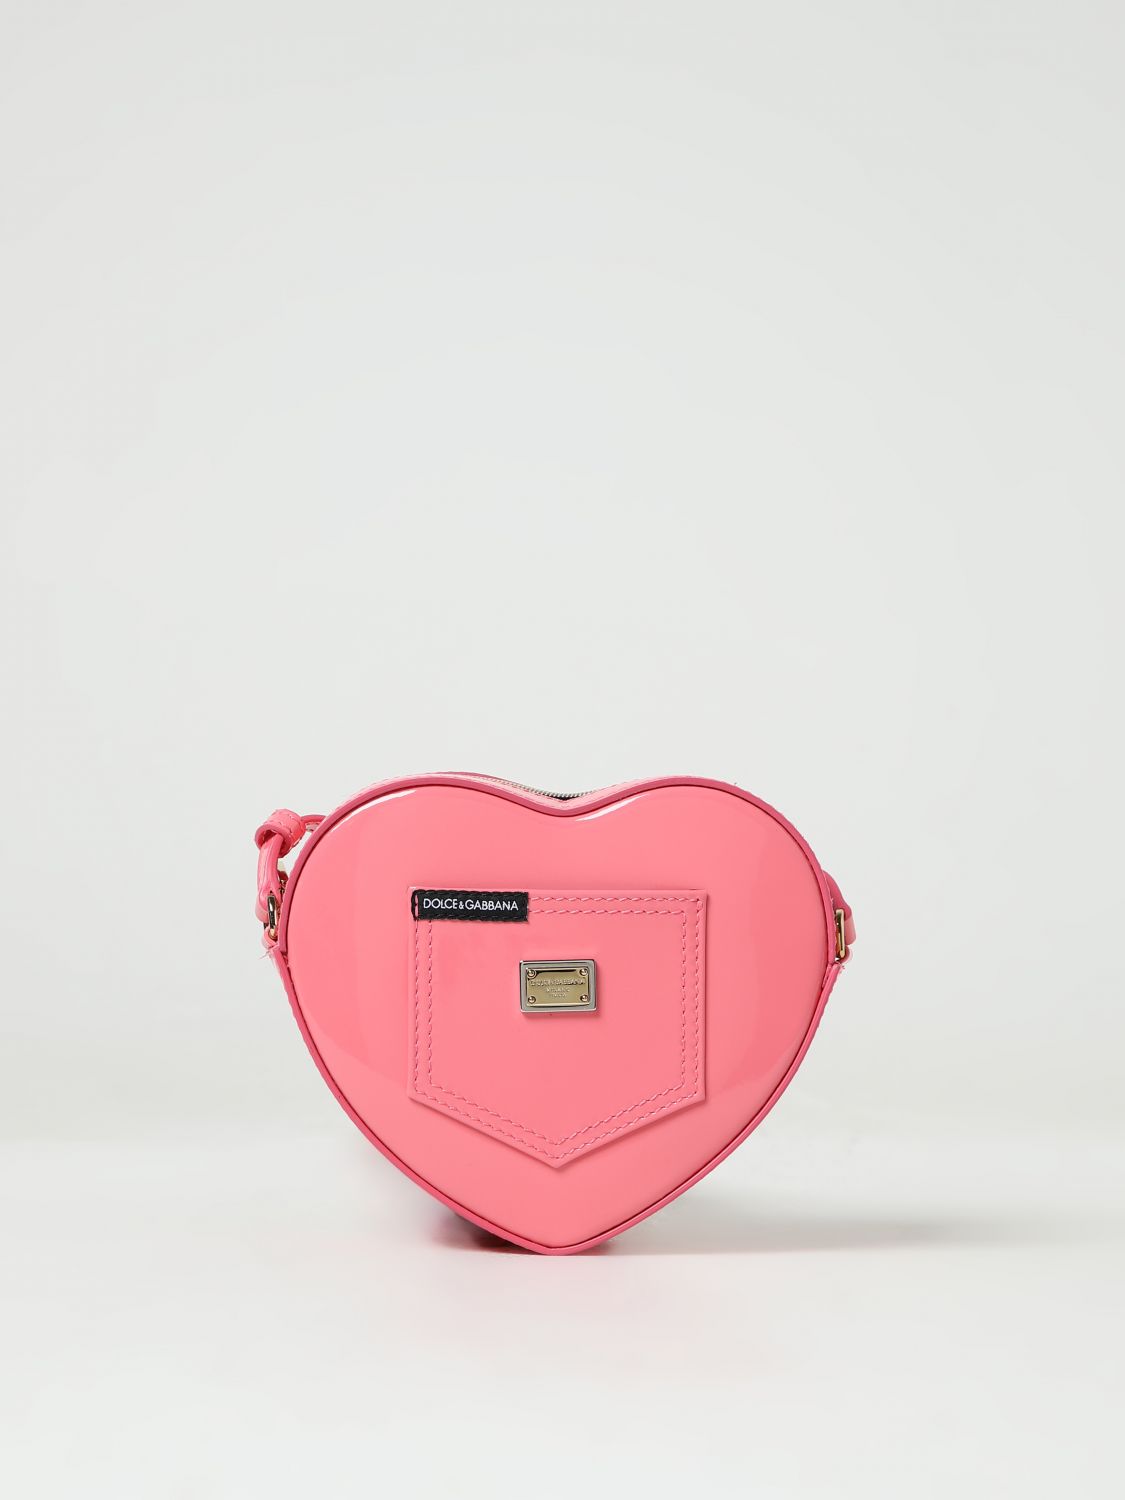 Dolce & Gabbana Heart Patent Leather Shoulder Bag In Pink